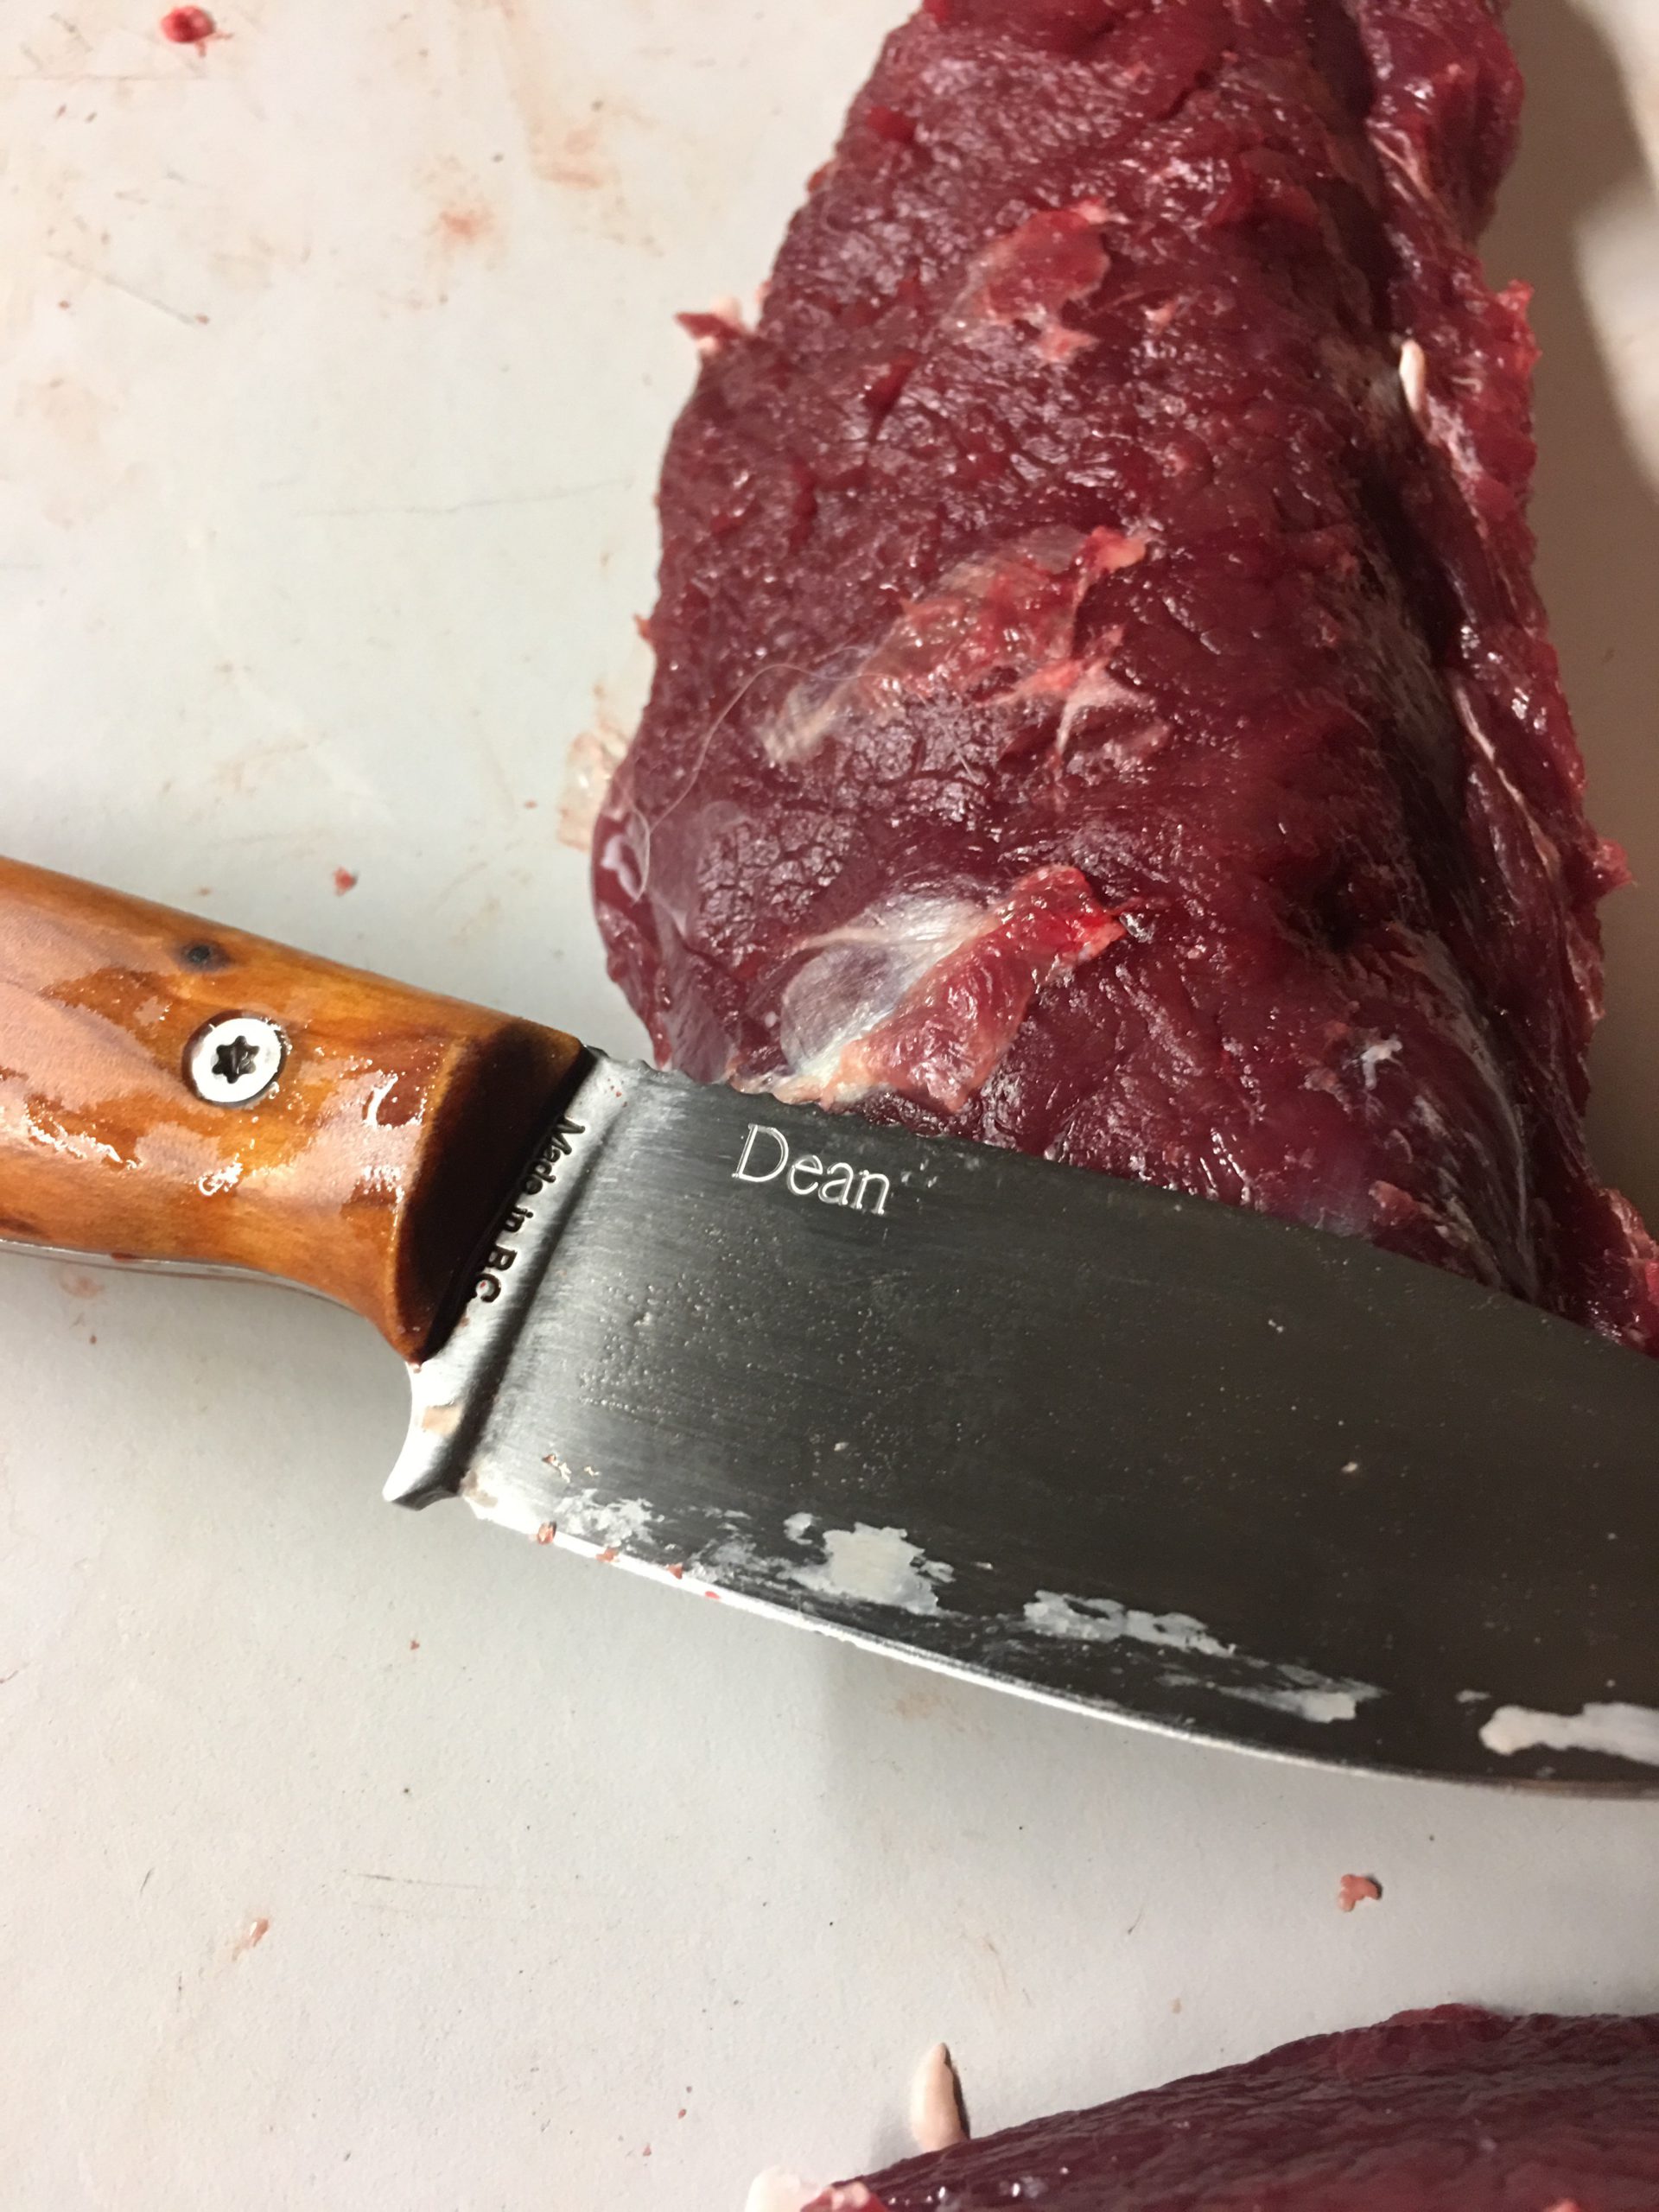 North_arm_knives_butchering_venison